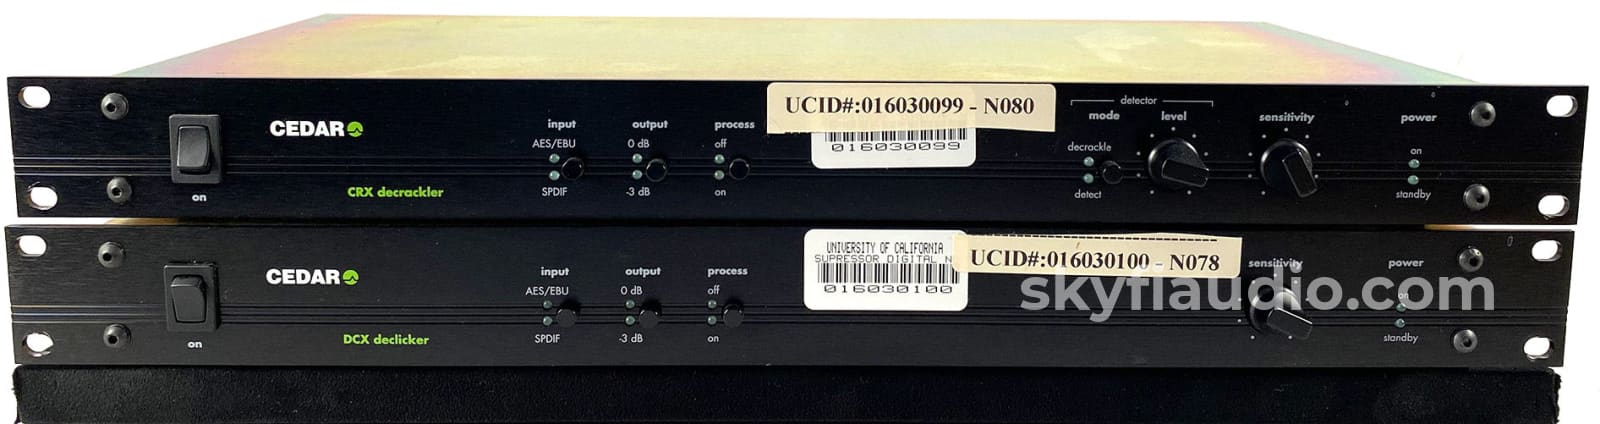 Cedar Audio Dcx Declicker And Crx Decrackler Accessory